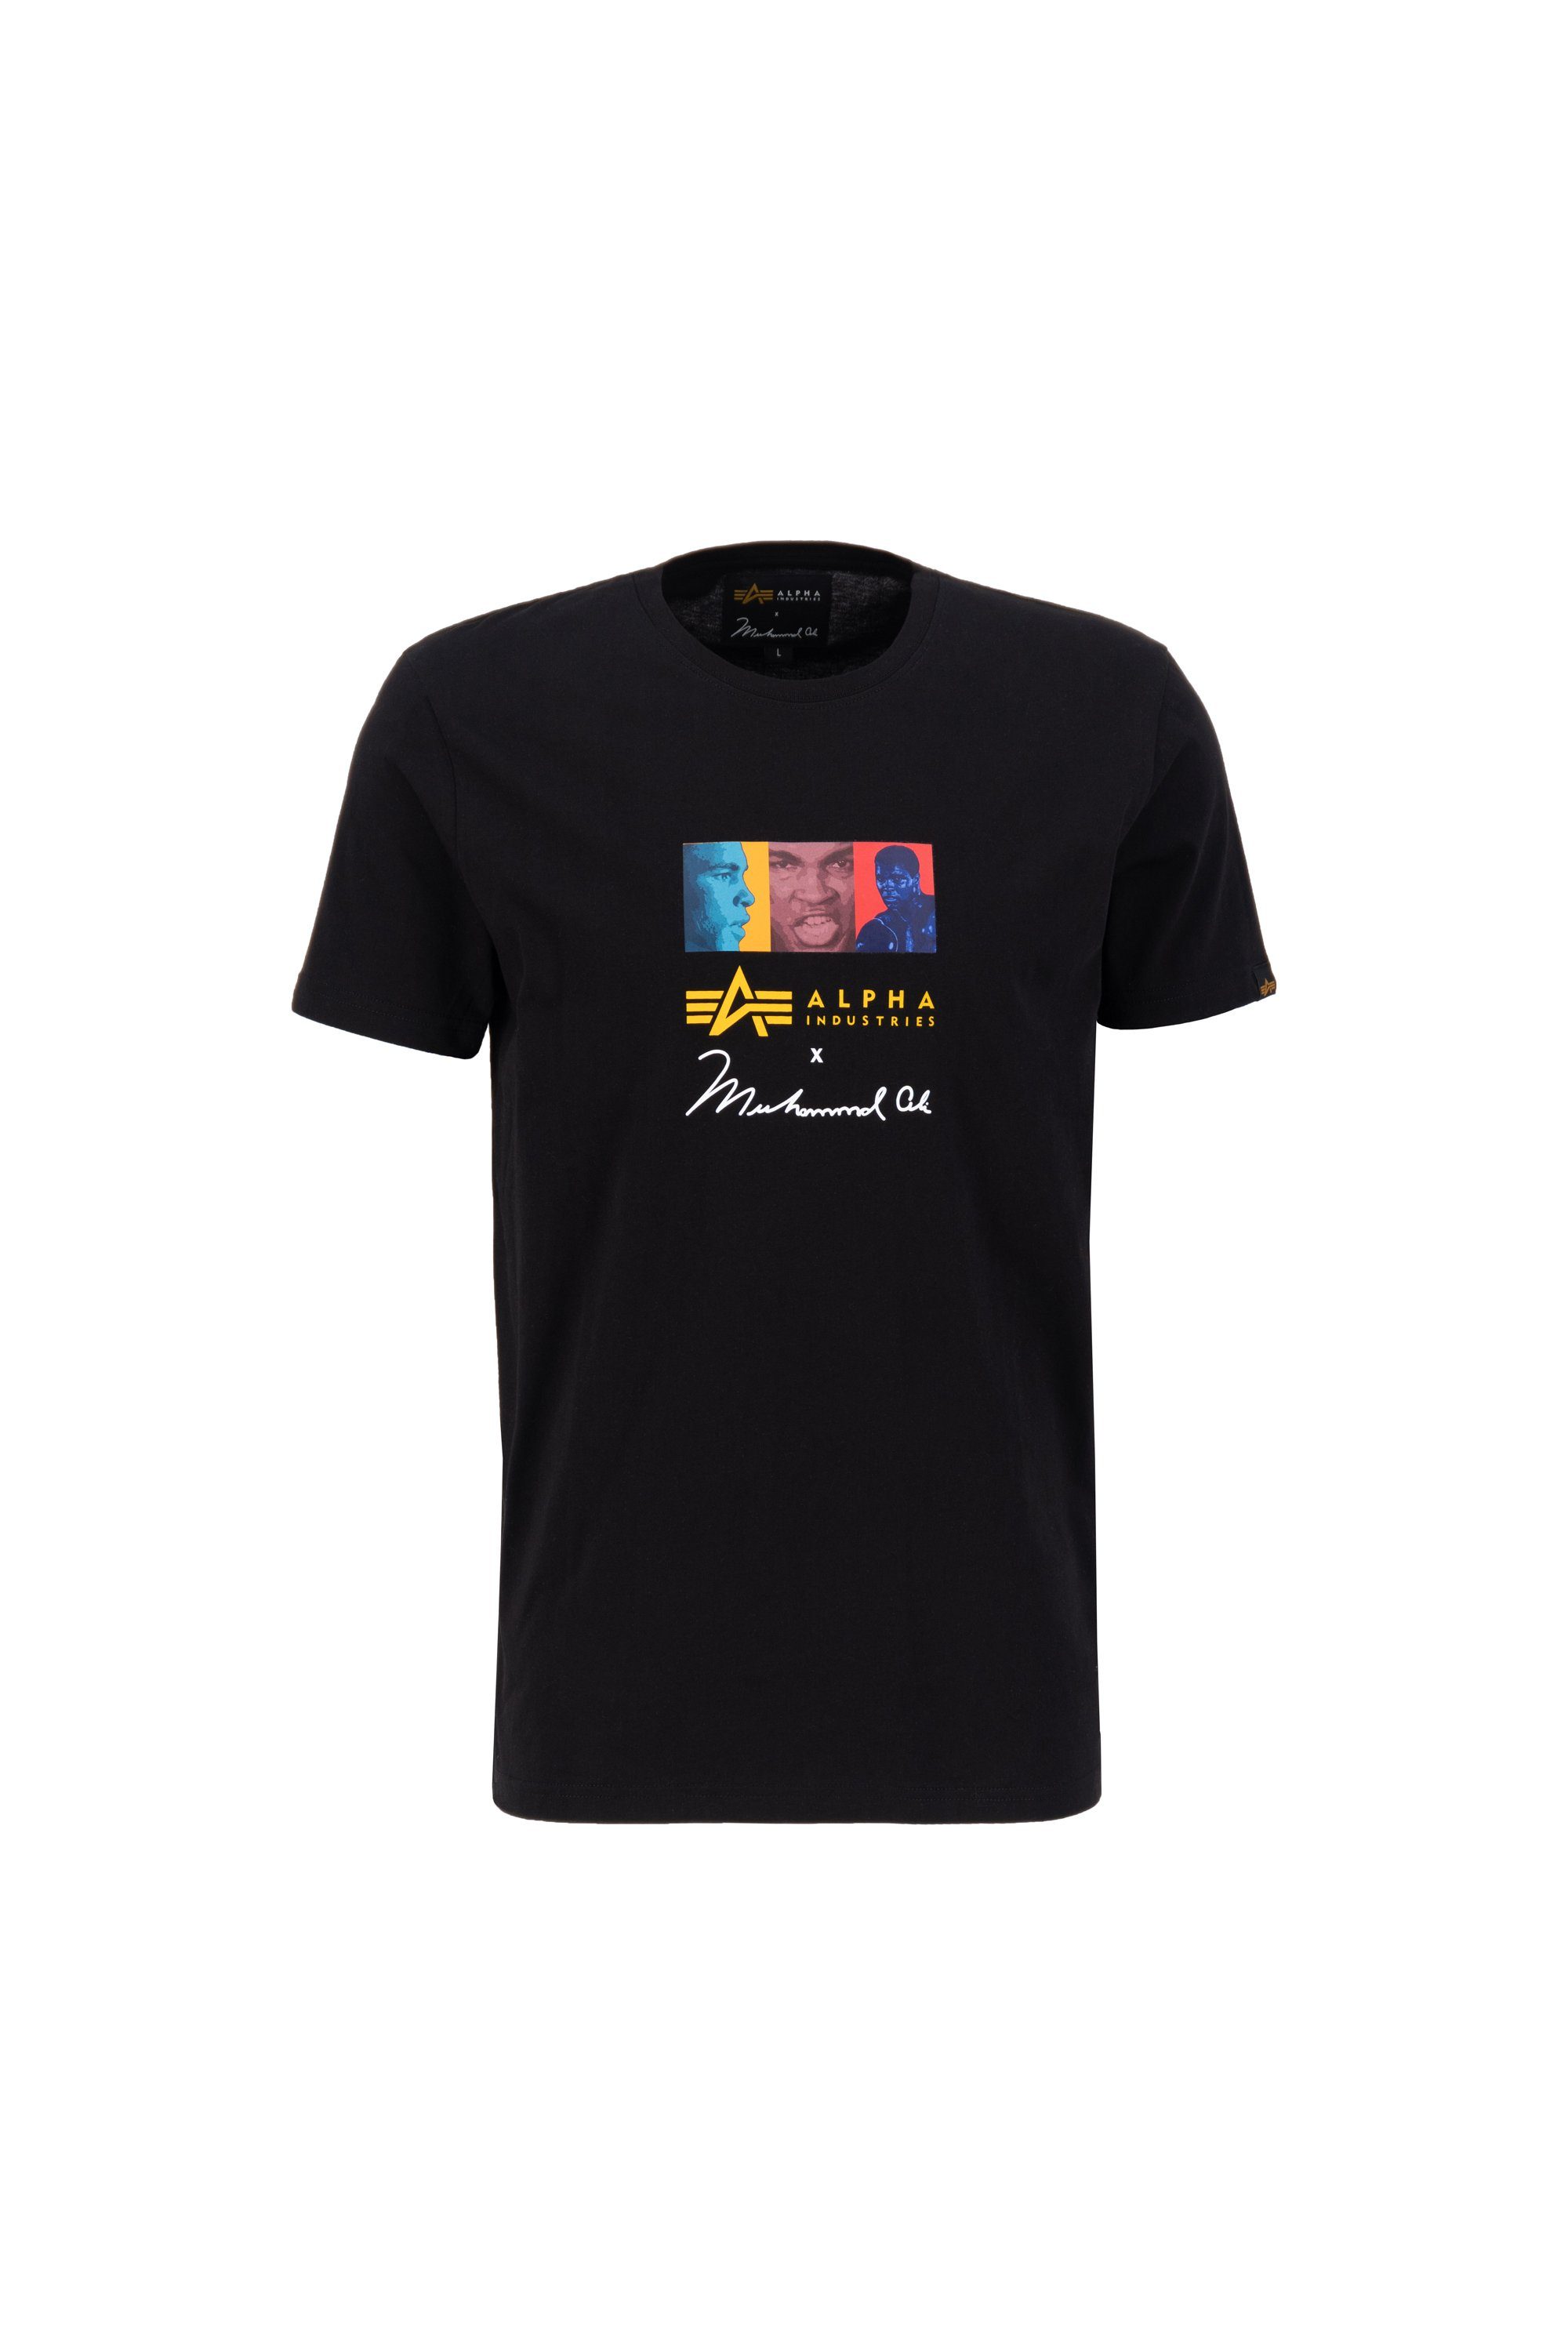 Pop Alpha Alpha Art Men T Industries Ali Industries T-Shirts T-Shirt Muhammad -